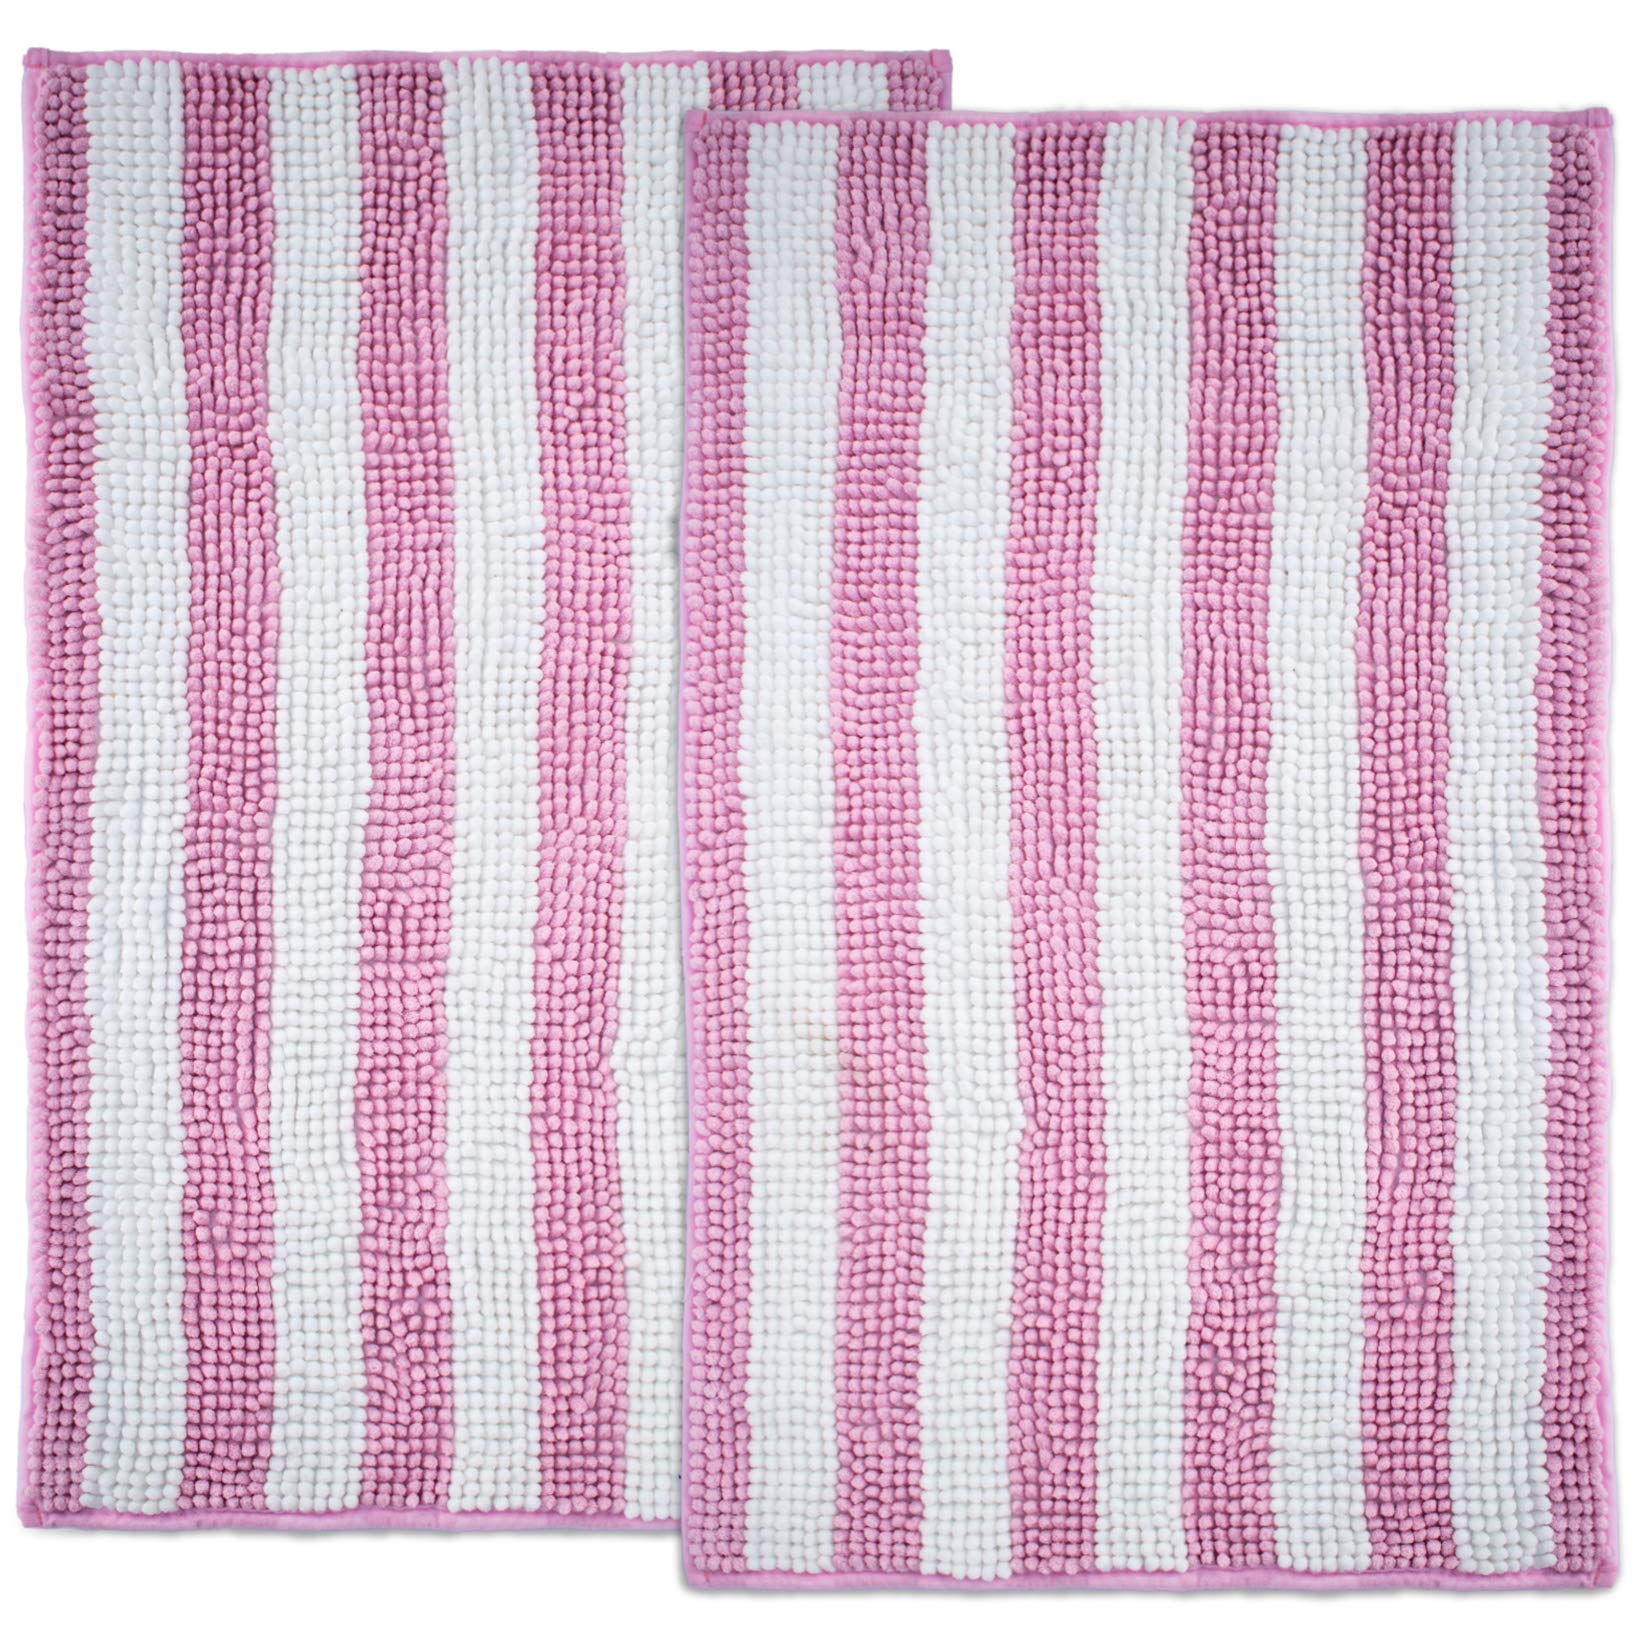 LuxUrux Bathroom Rug Mat Set�Extra-Soft Plush Bath mat Shower Bathroom Rugs 16 x 24 inch Set,1'' Chenille Microfiber Material, Super Absorbent. (15 x 23'', Striped Pink)  - Very Good